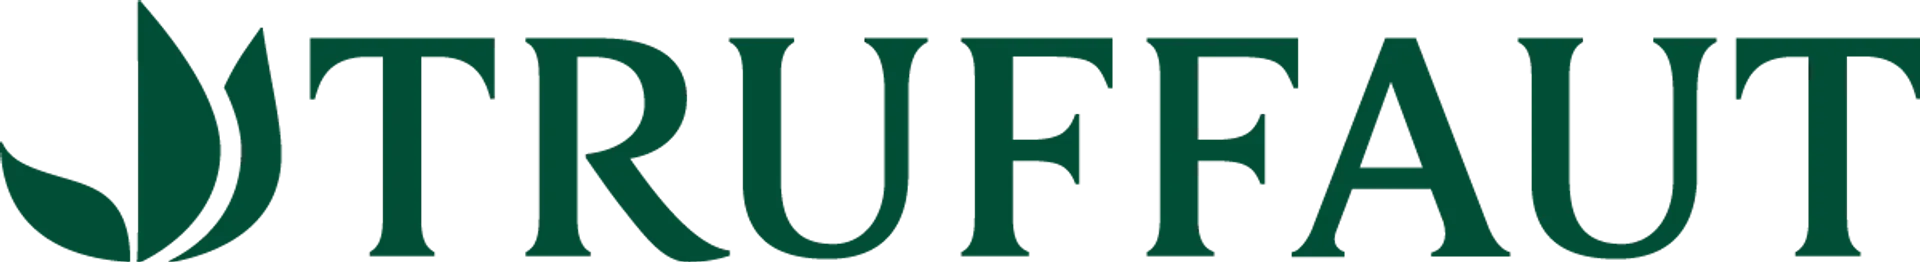 TRUFFAUT logo